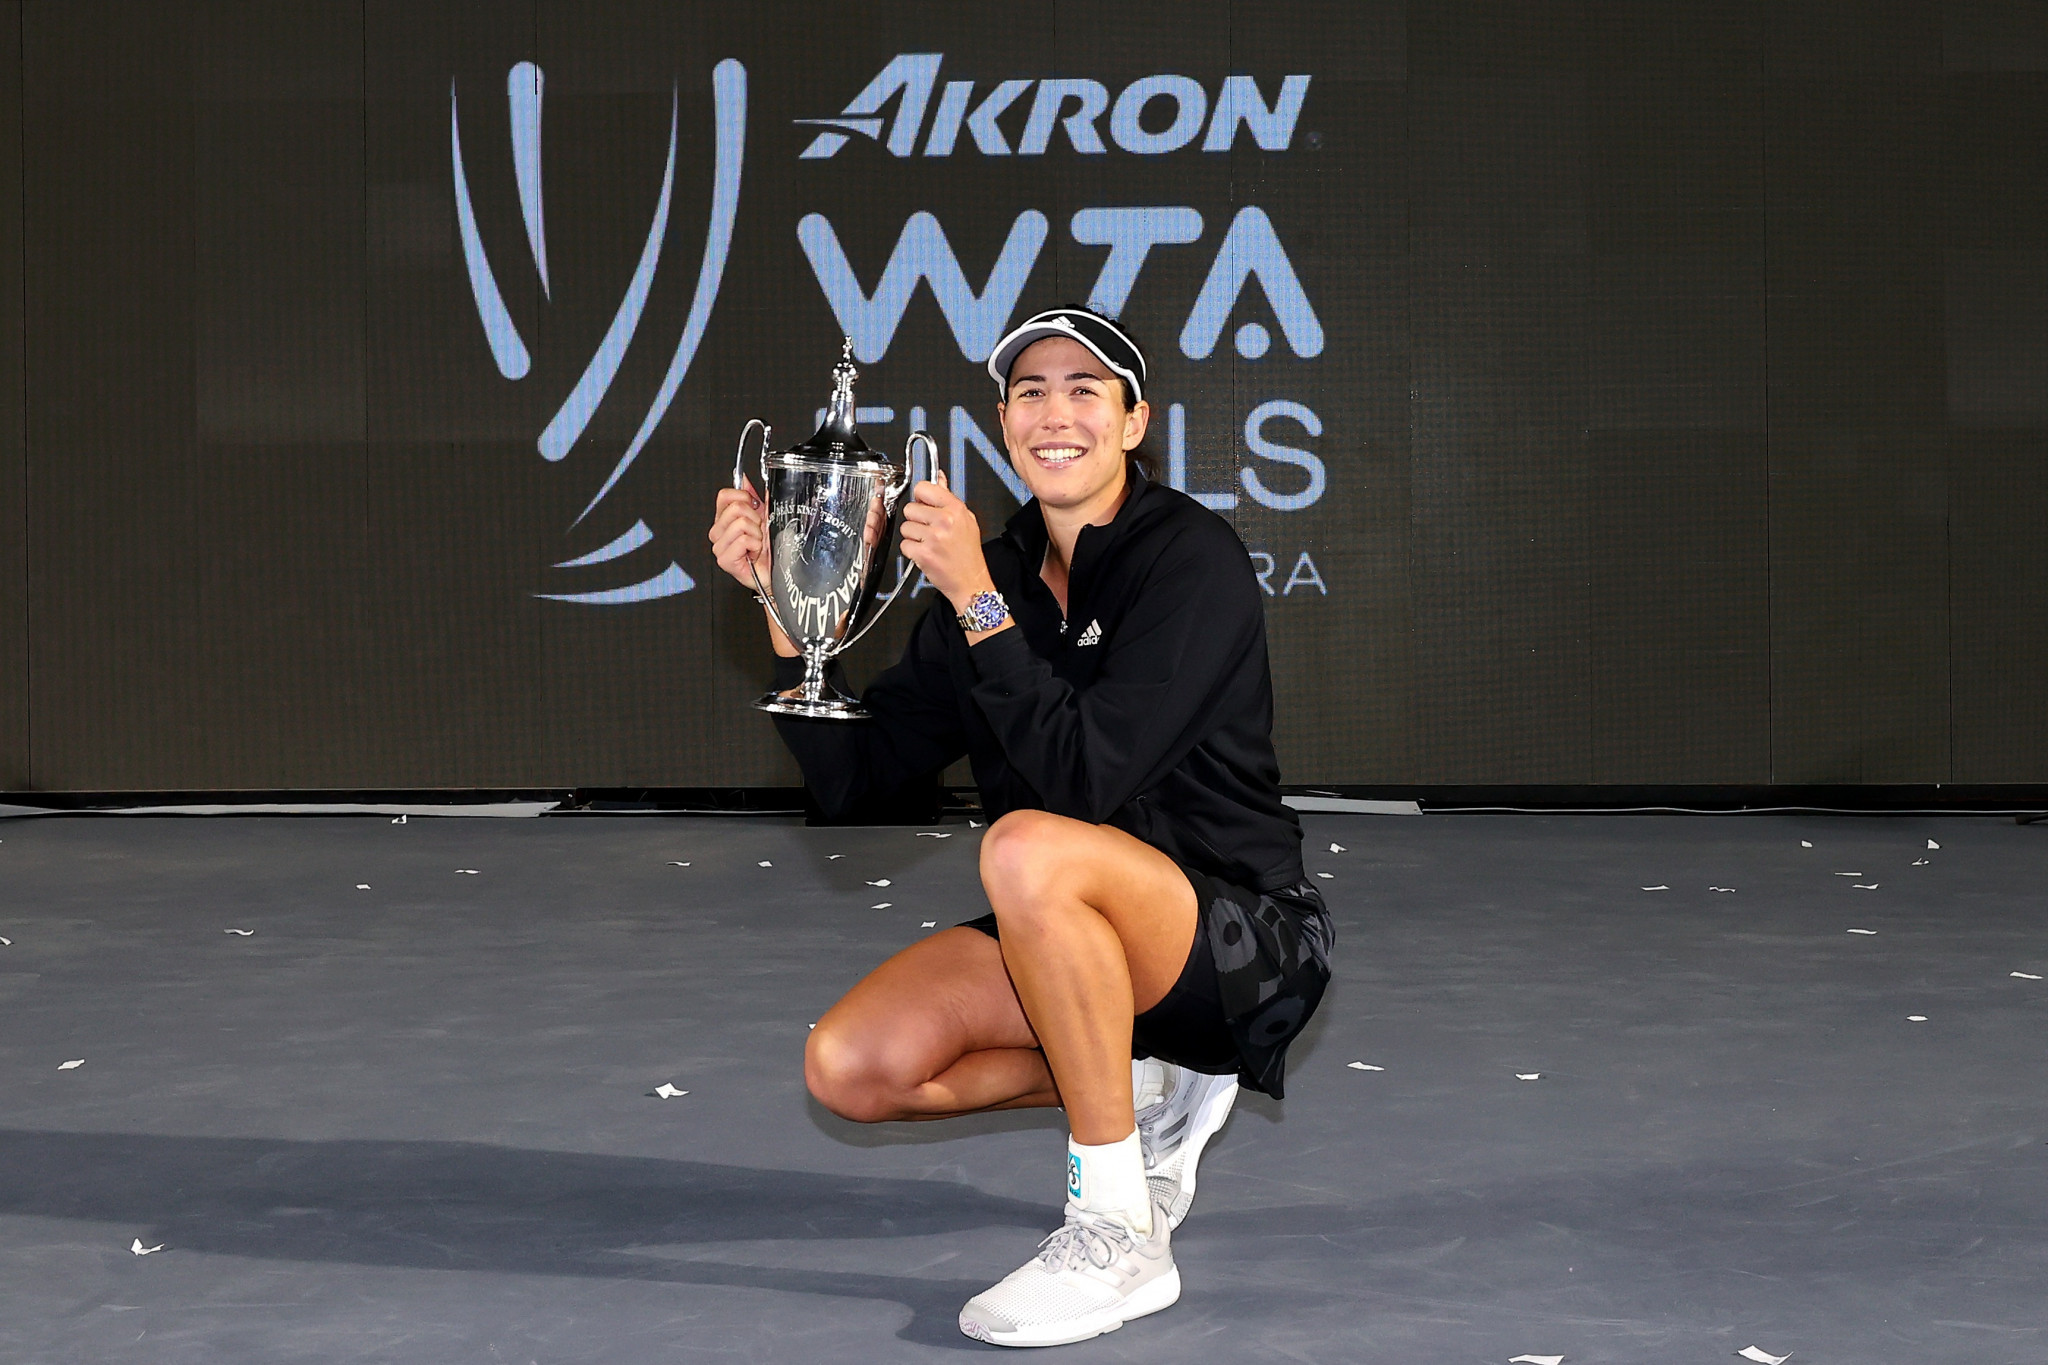 Spain's Garbiñe Muguruza is the reigning WTA Finals champion after winning in Guadalajara ©Getty Images